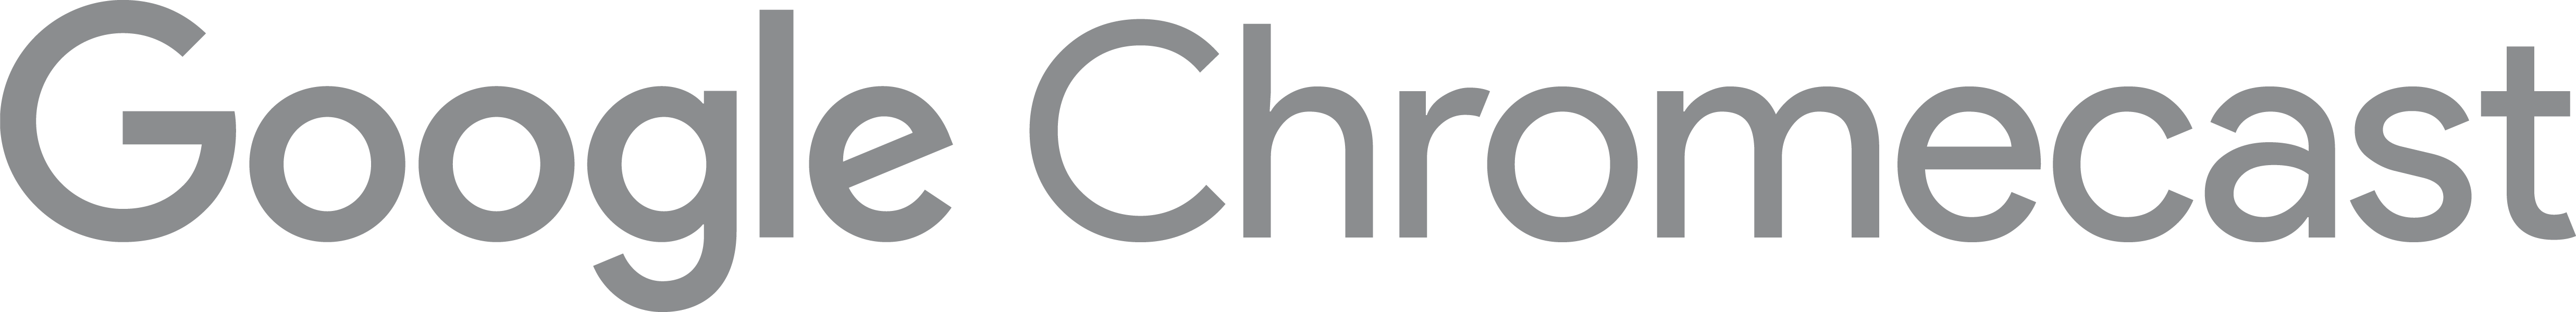 Google Chromecast Logo - Google Chromecast wordmark.png